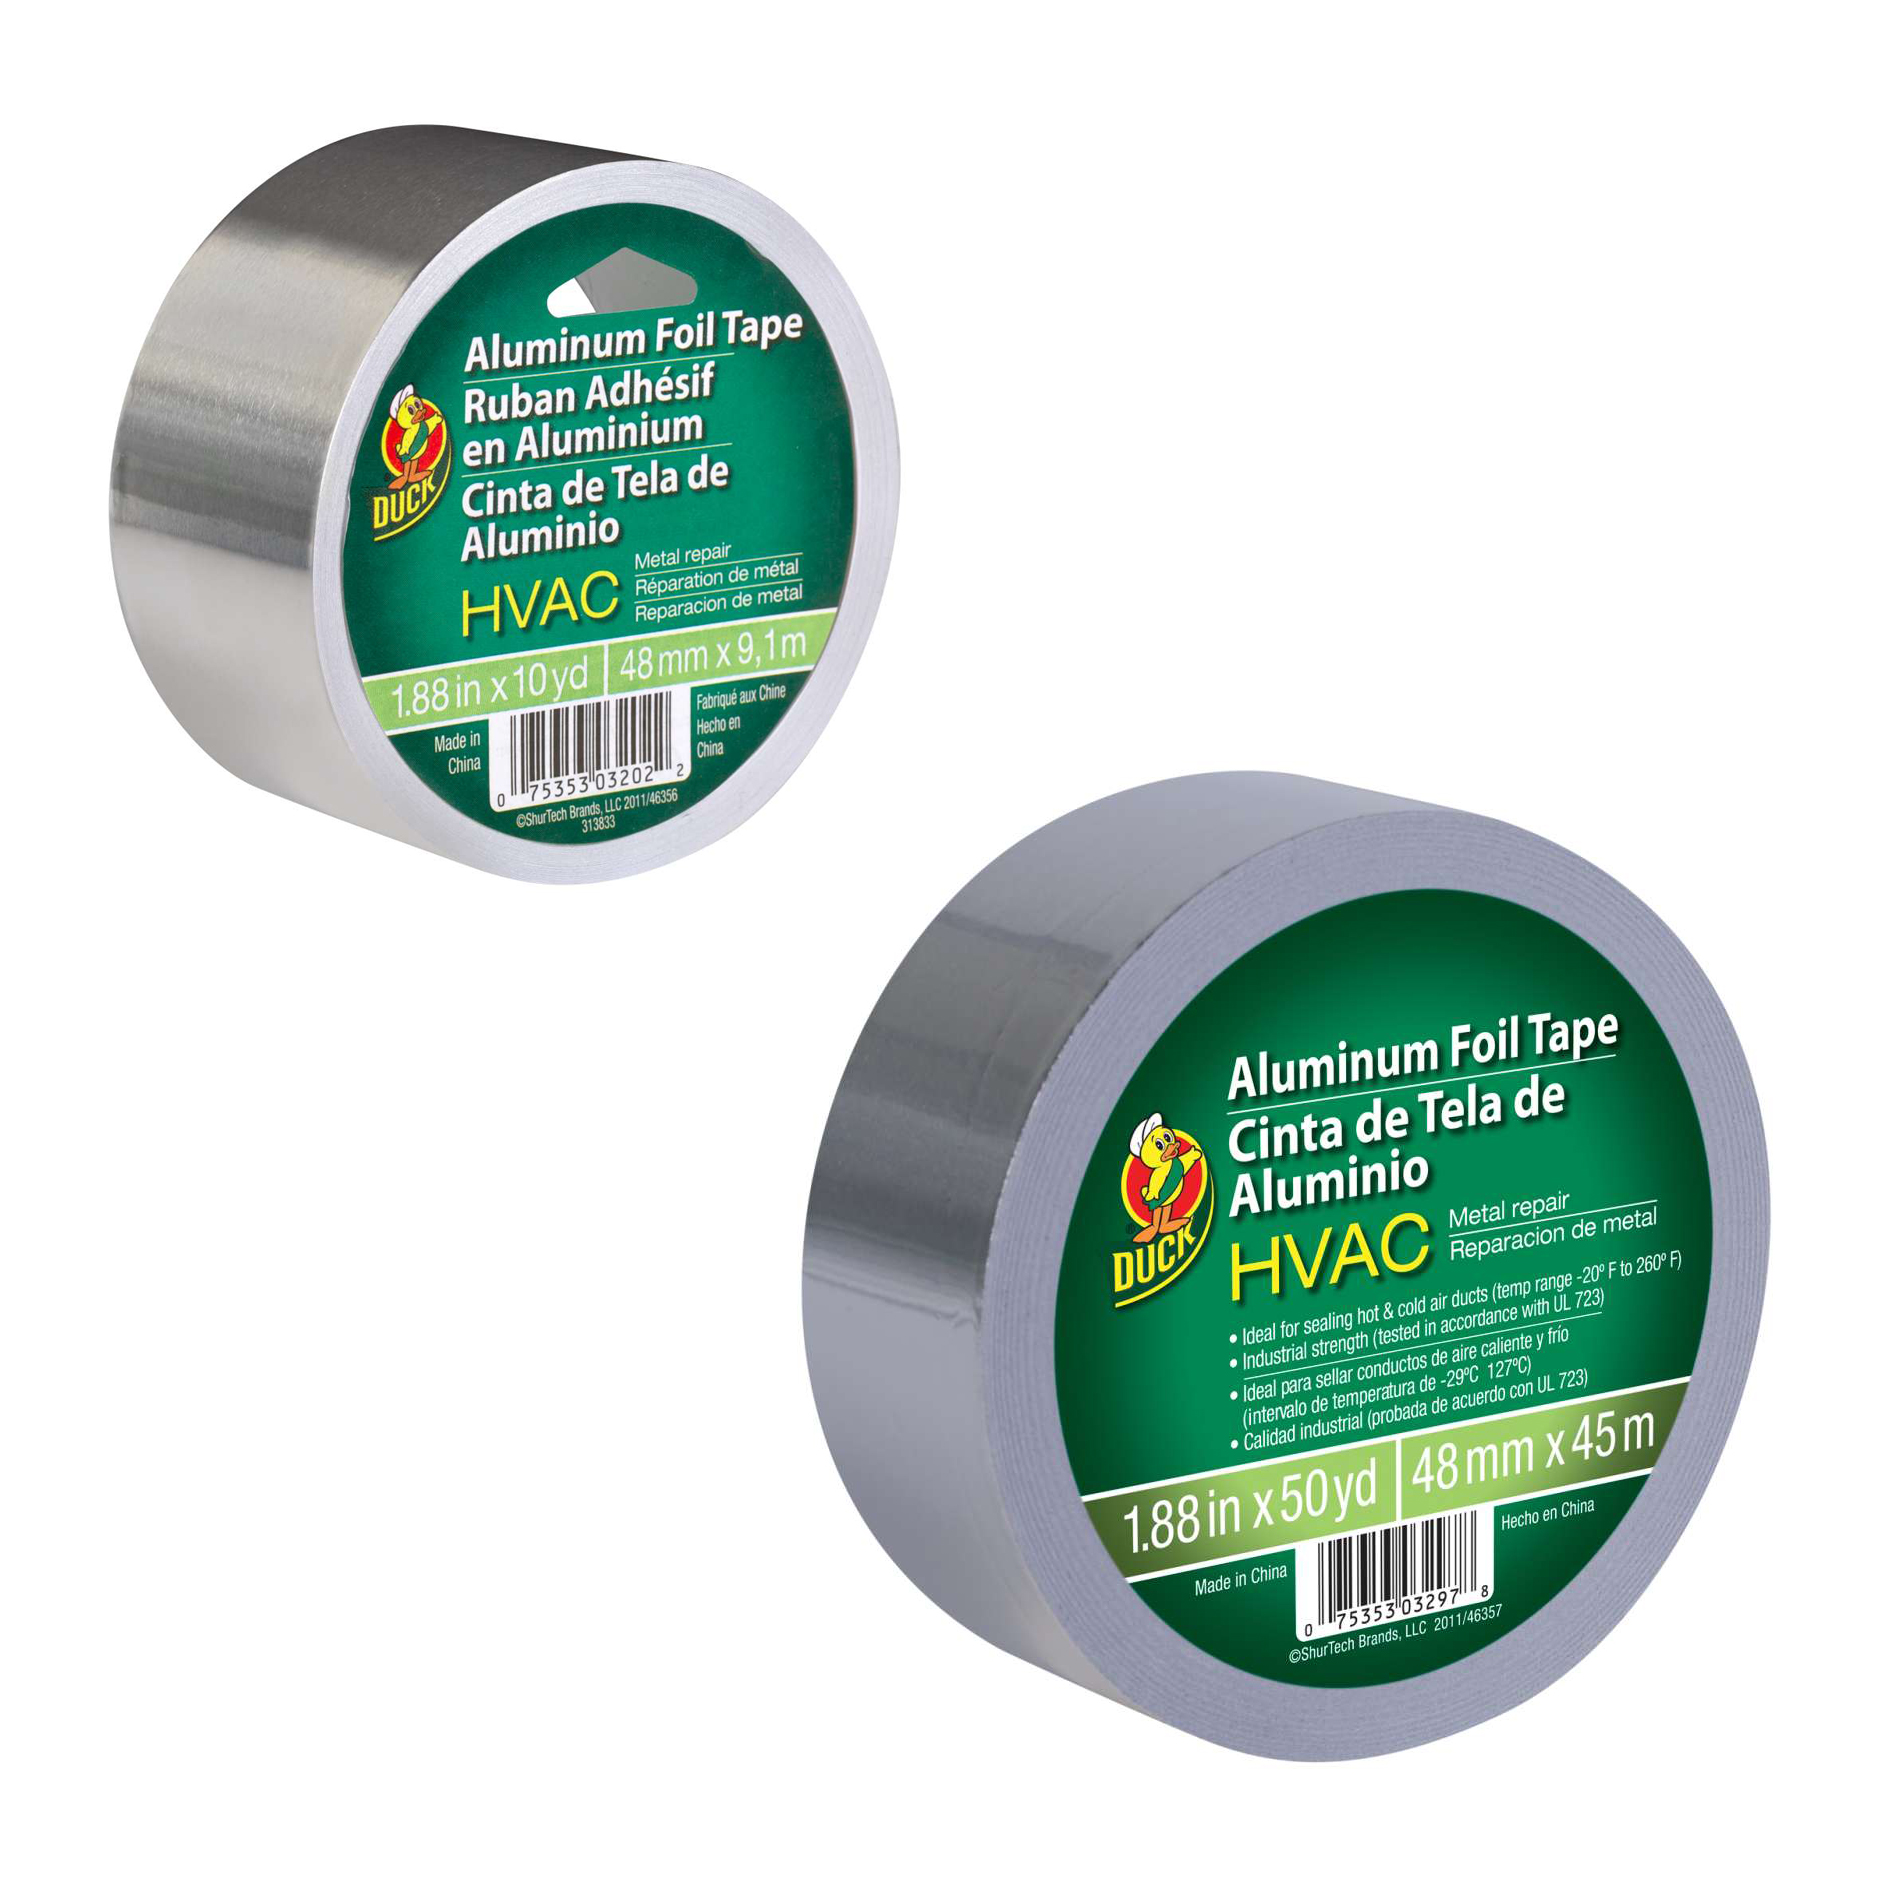 Shurtape 1.88 in x 50 yds Aluminum Foil Repair Tape Excellent shelf life 